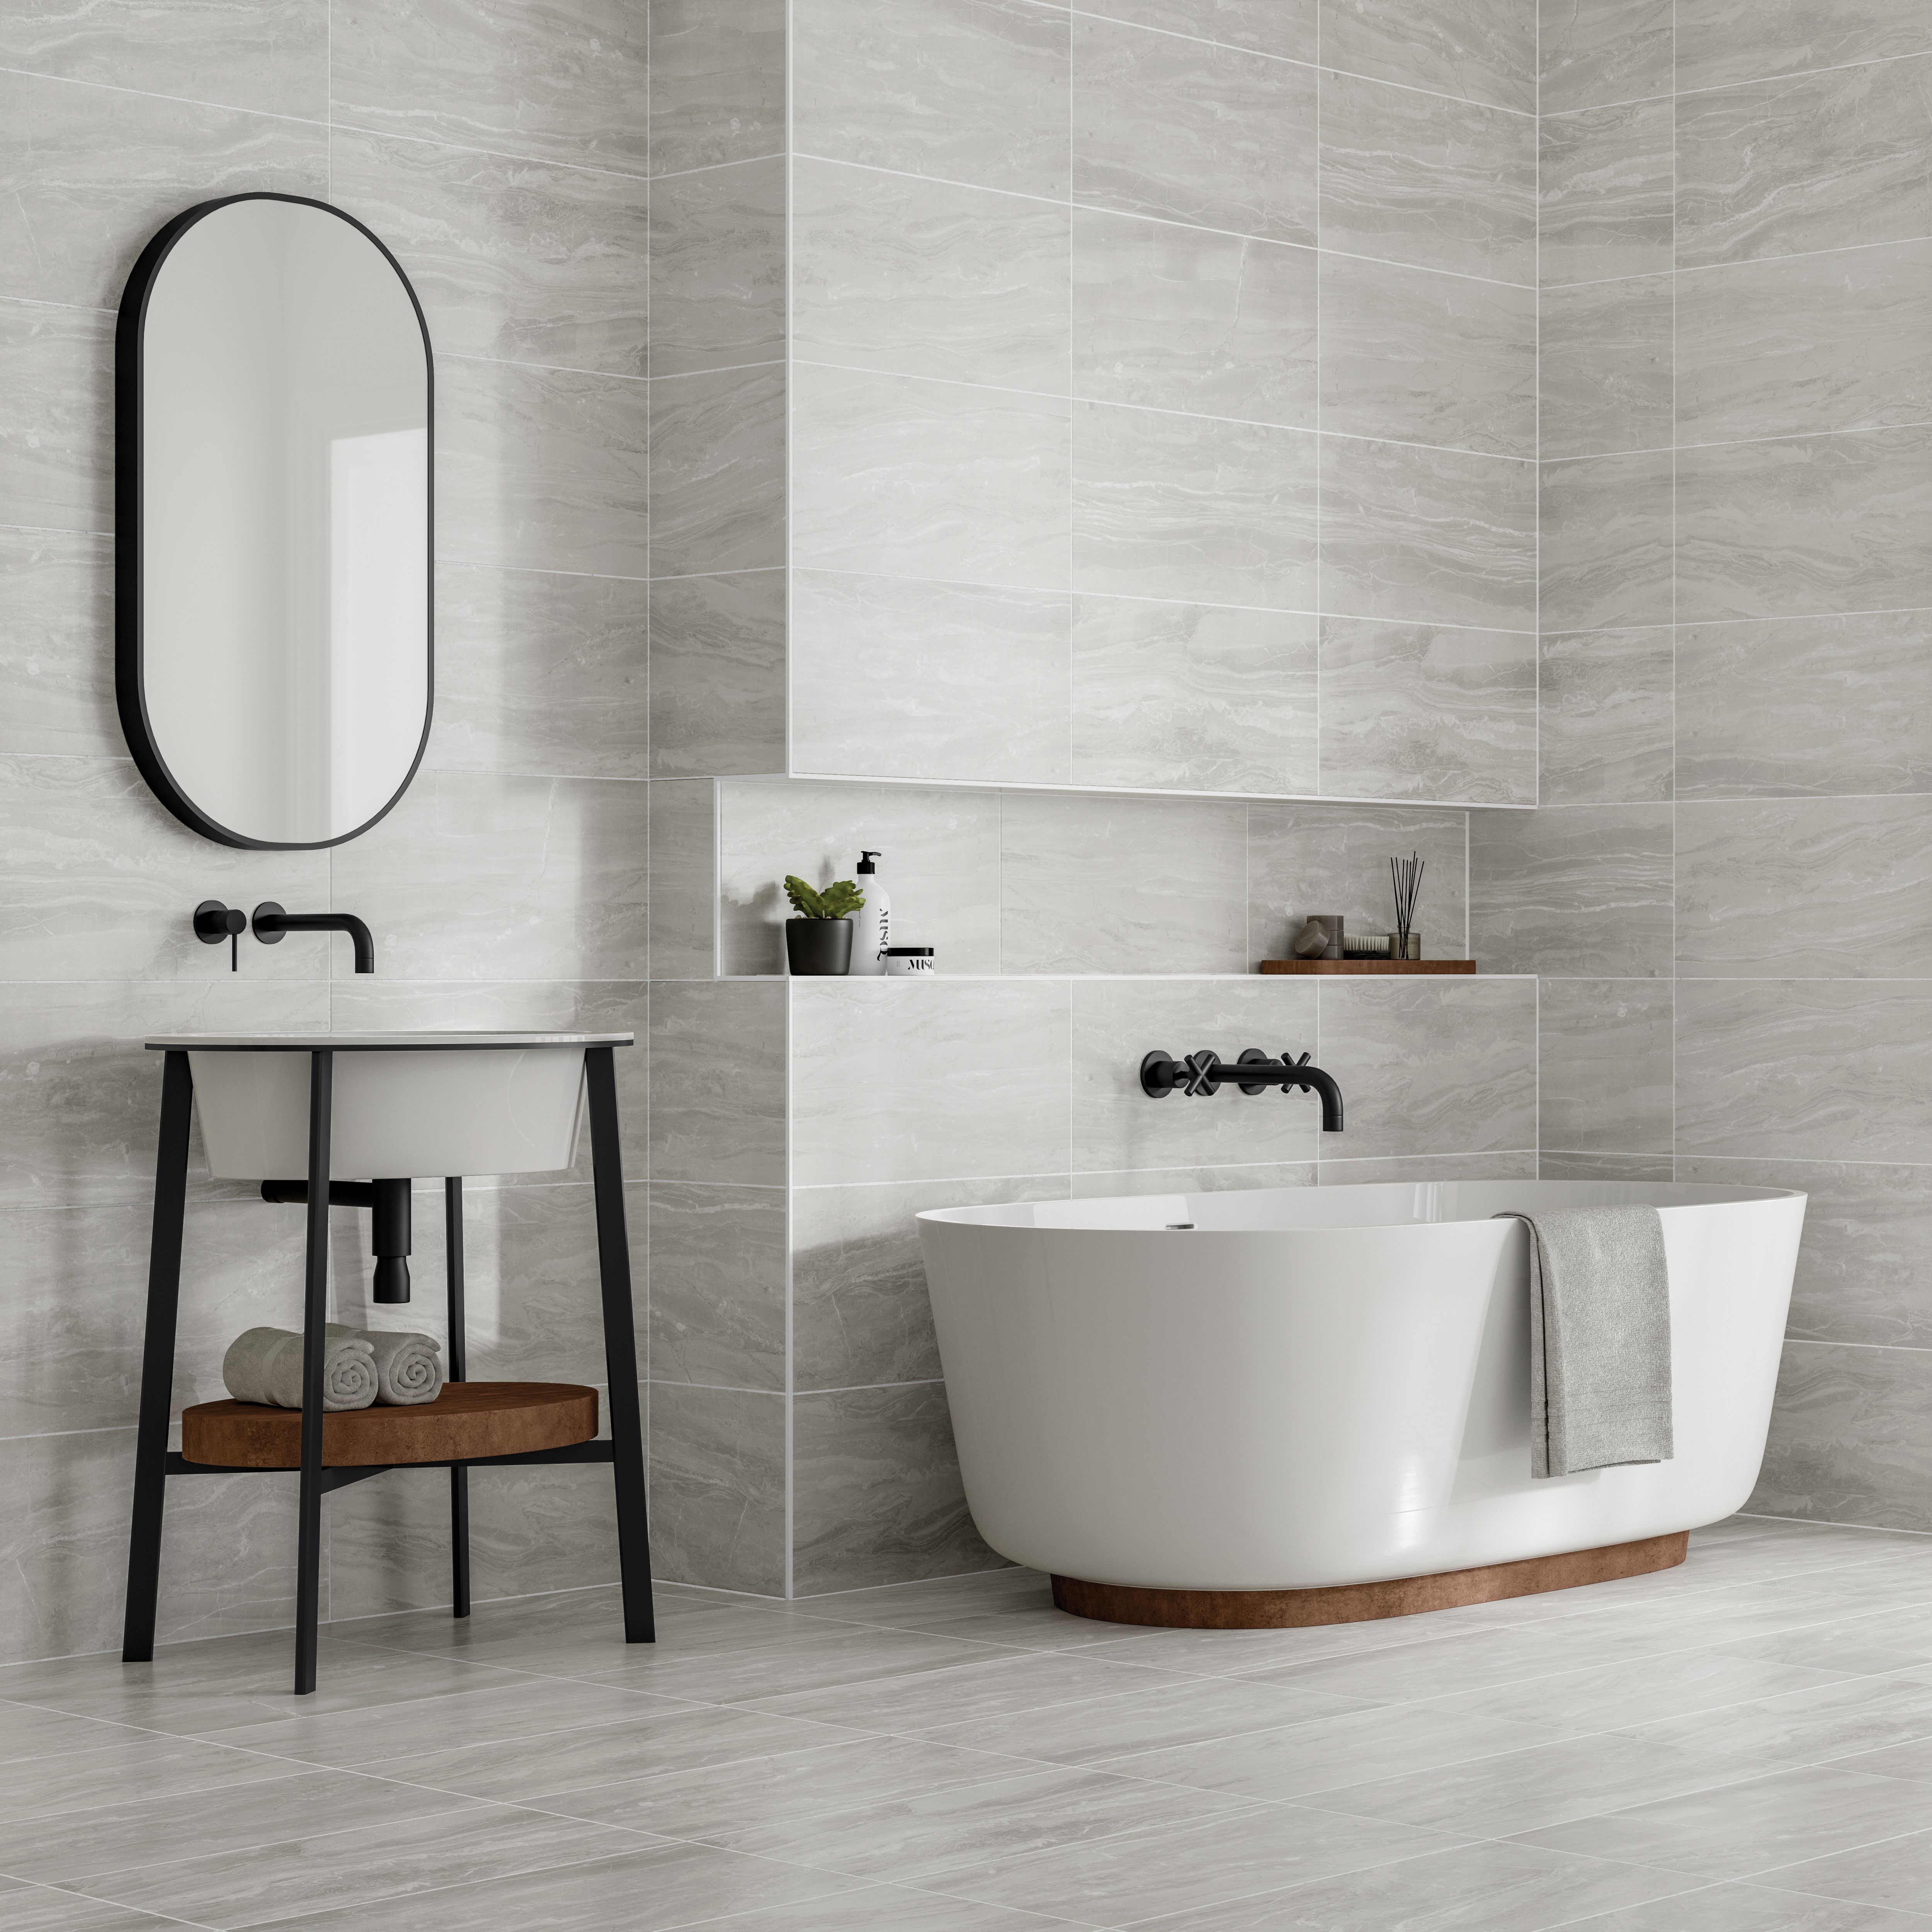 Image of Wickes Callika™ Mist Grey Porcelain Wall & Floor Tile - 600 x 300mm